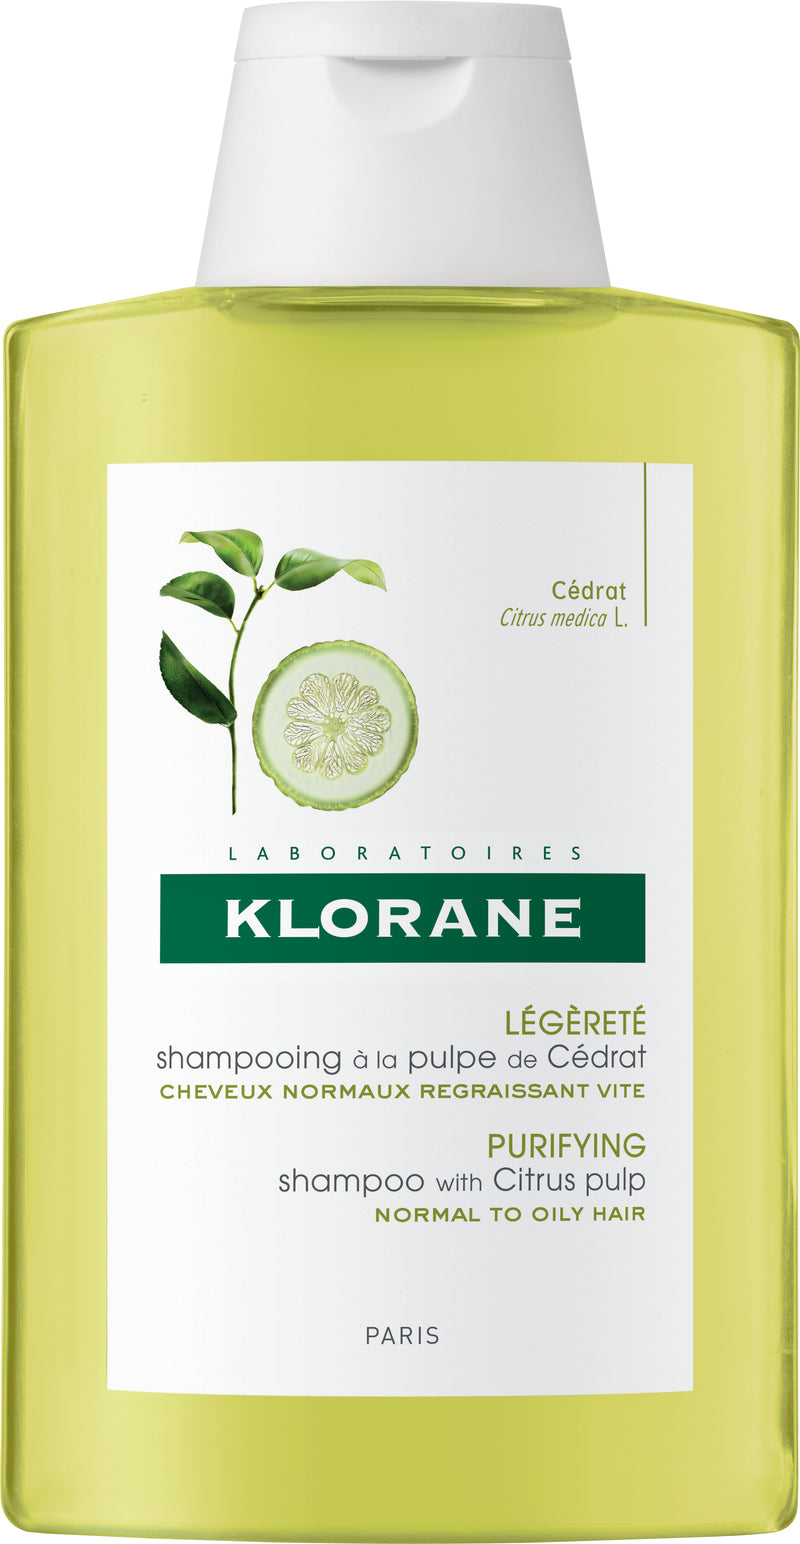 Klorane Shampoo Citrus Pulp 200ml